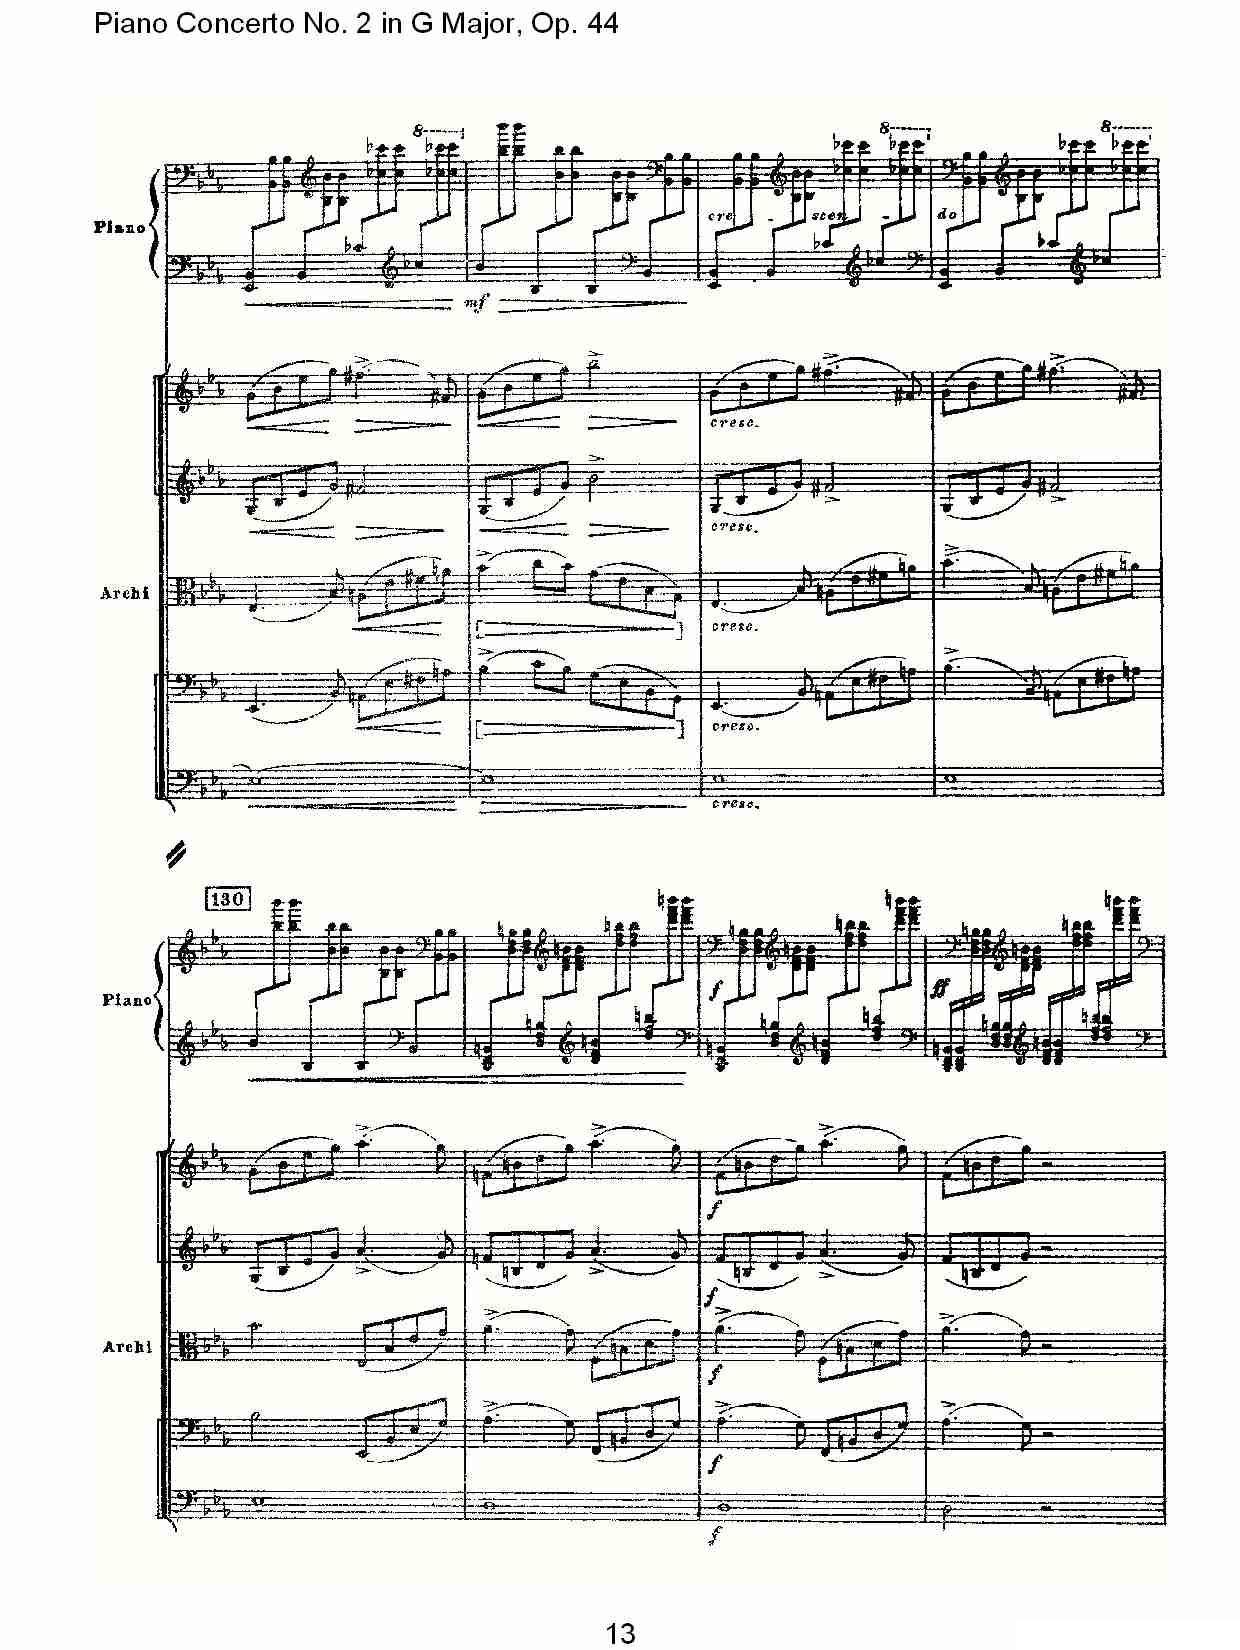 G大调第二钢琴协奏曲, Op.44第一乐章（一）钢琴曲谱（图13）